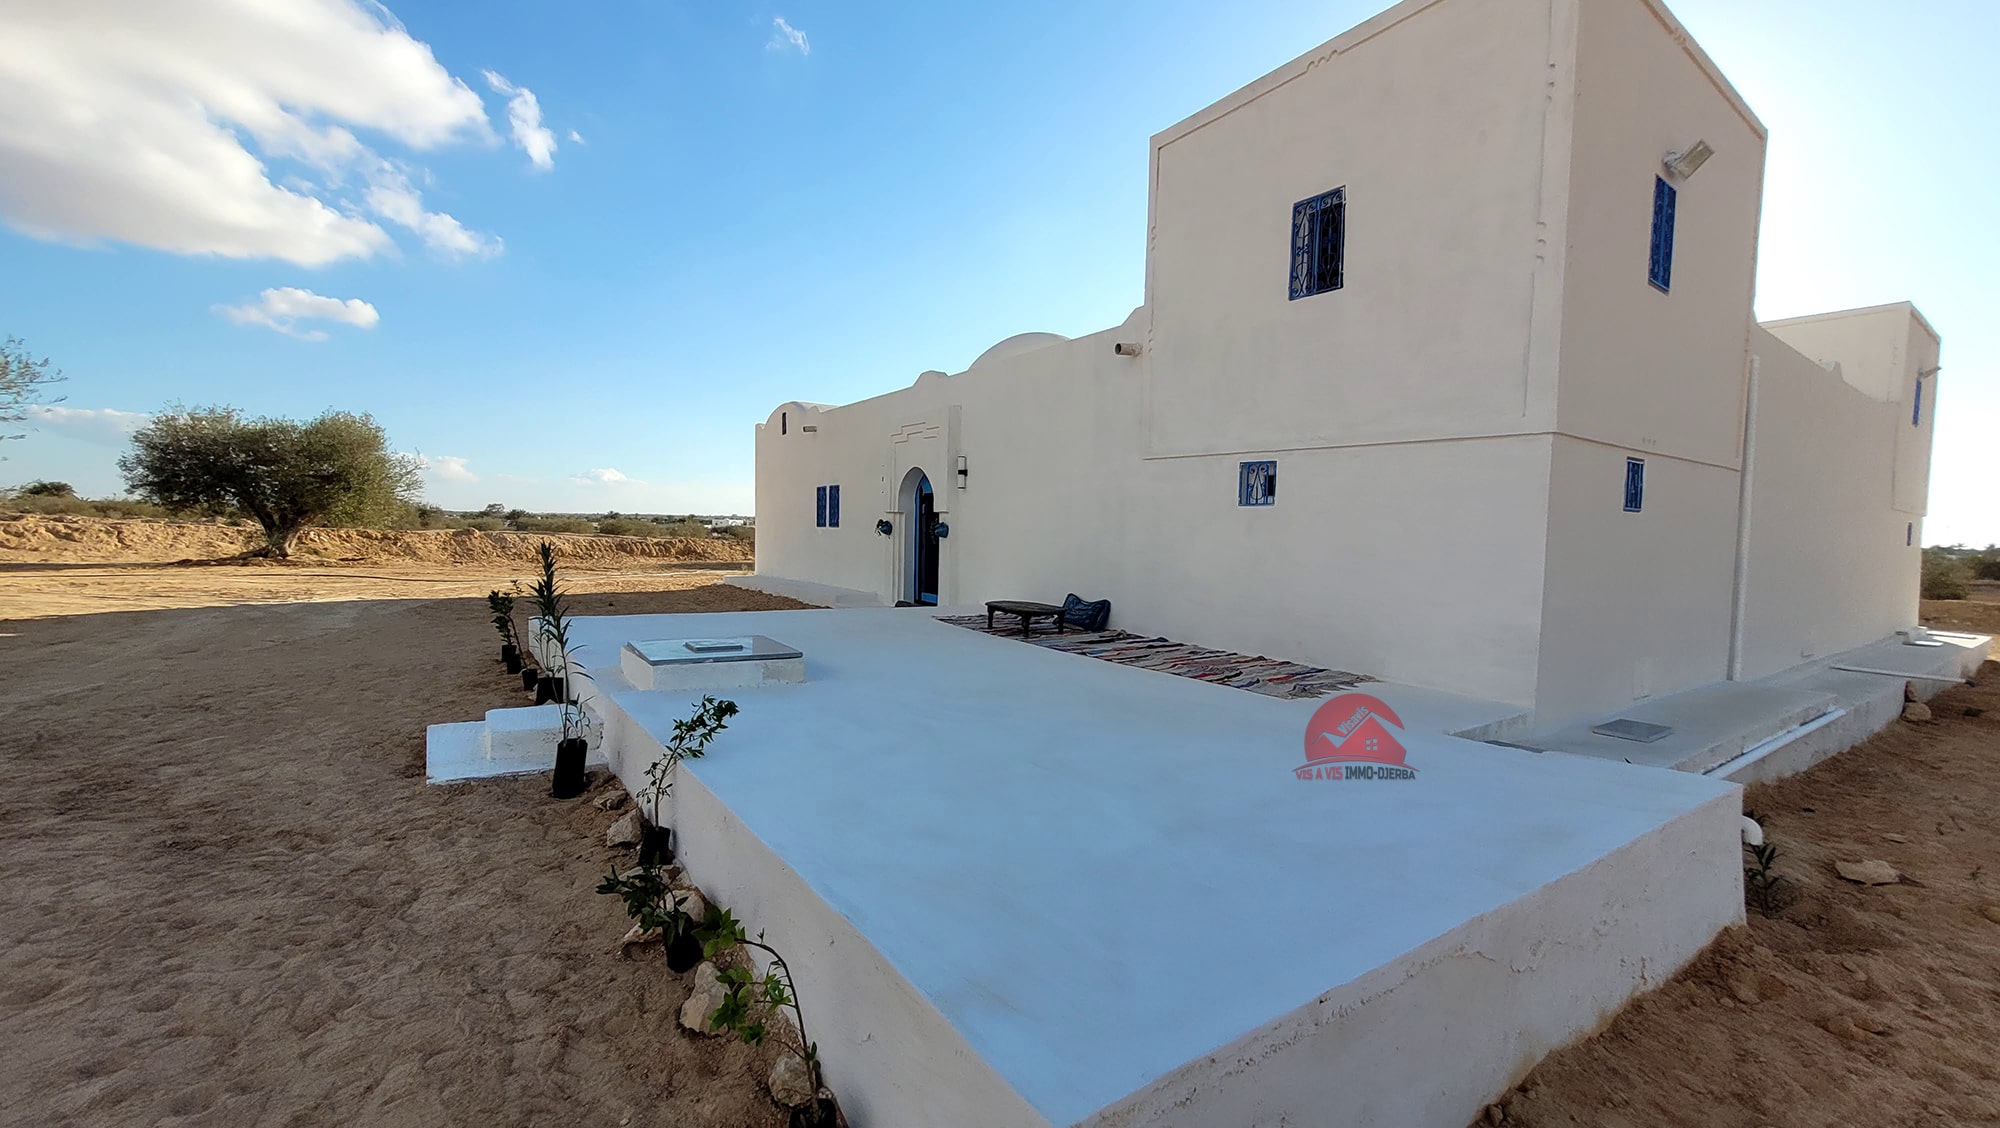 Djerba - Houmet Essouk Djerba  Vente Maisons Houch djerbien sur un grand terrain  ref h615